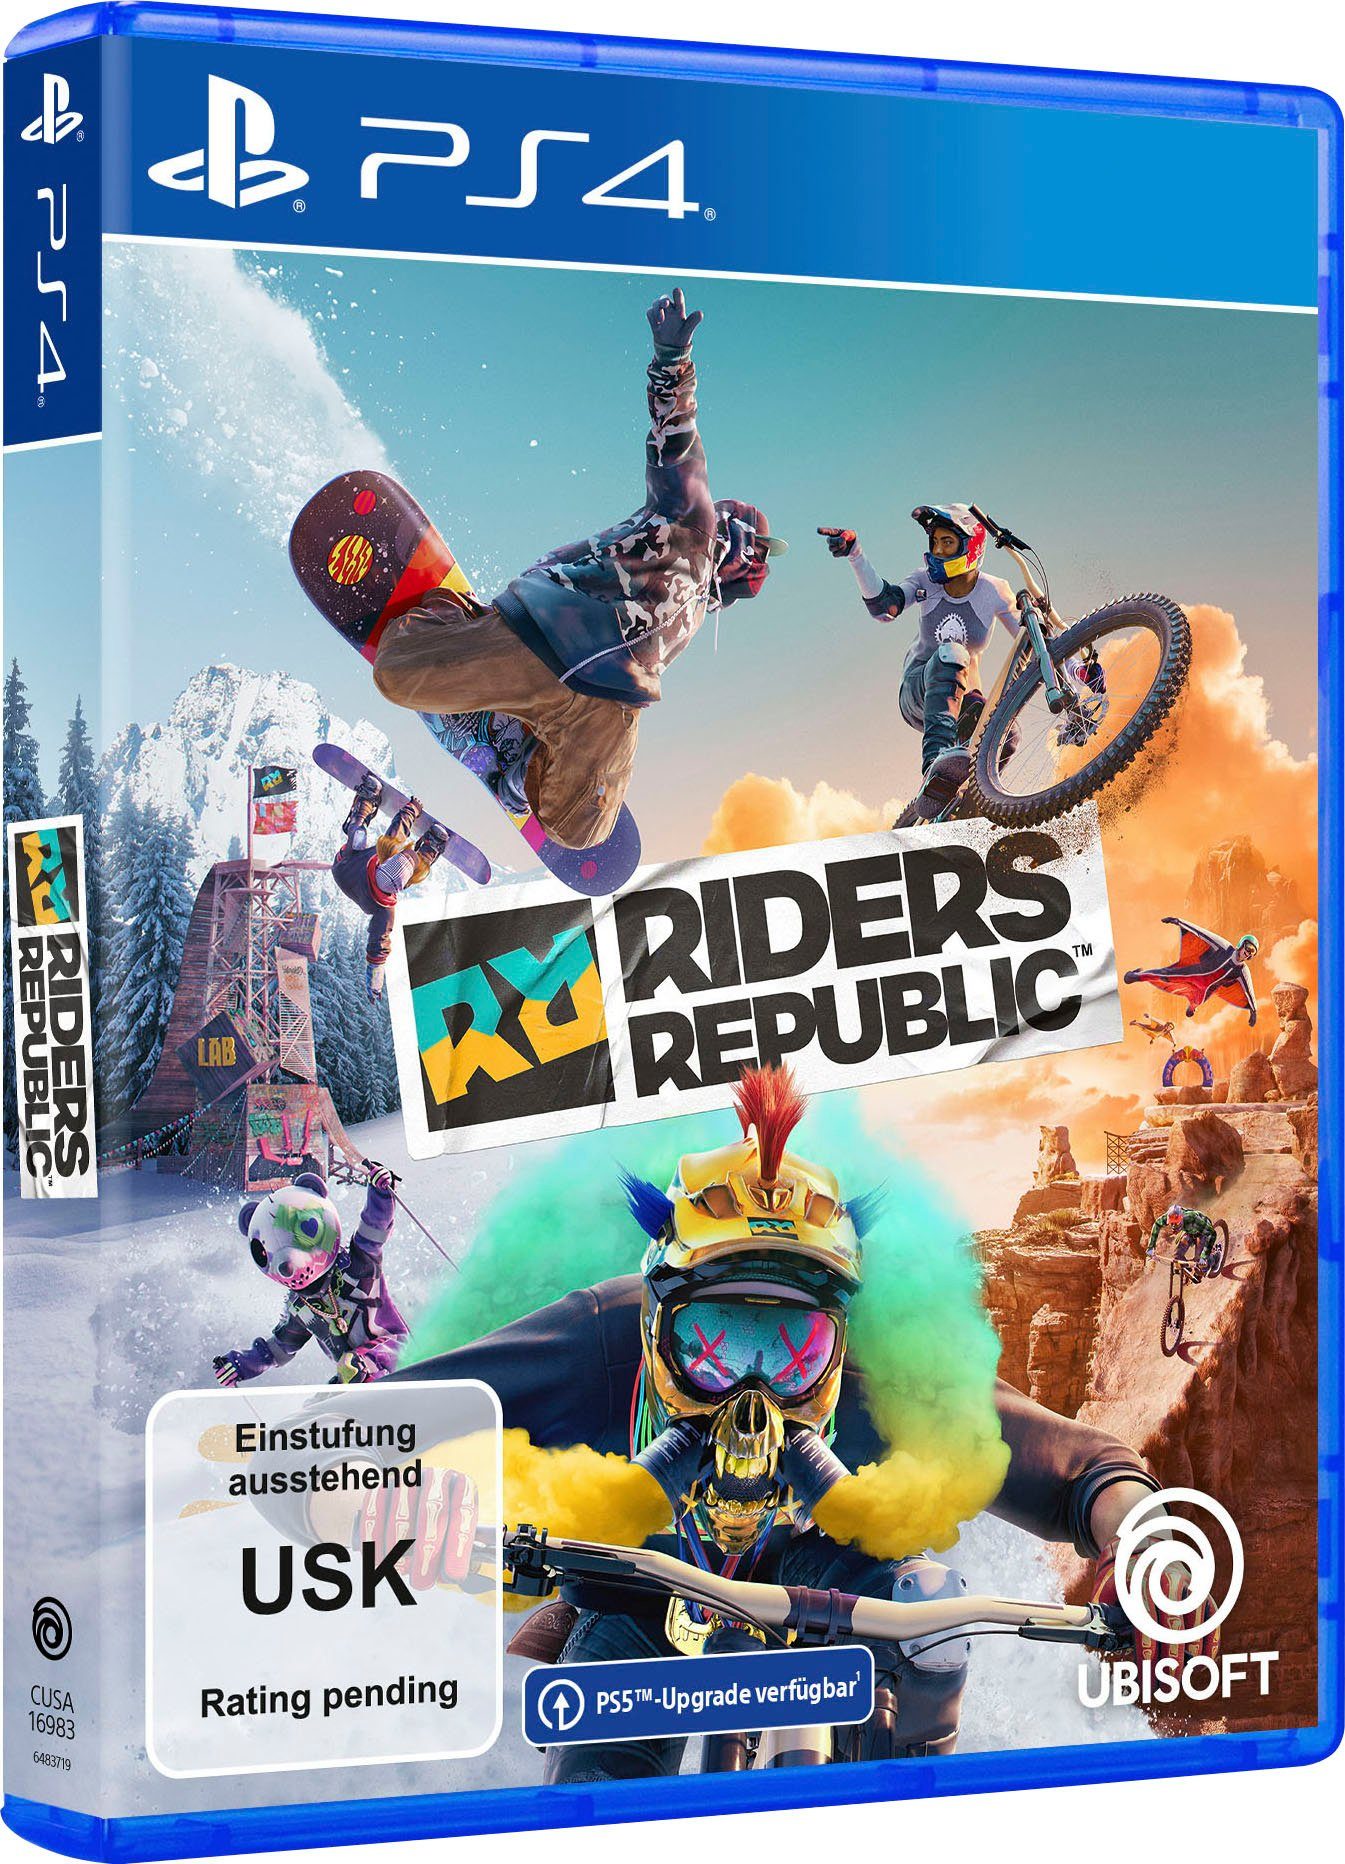 UBISOFT 4 Riders PlayStation Republic